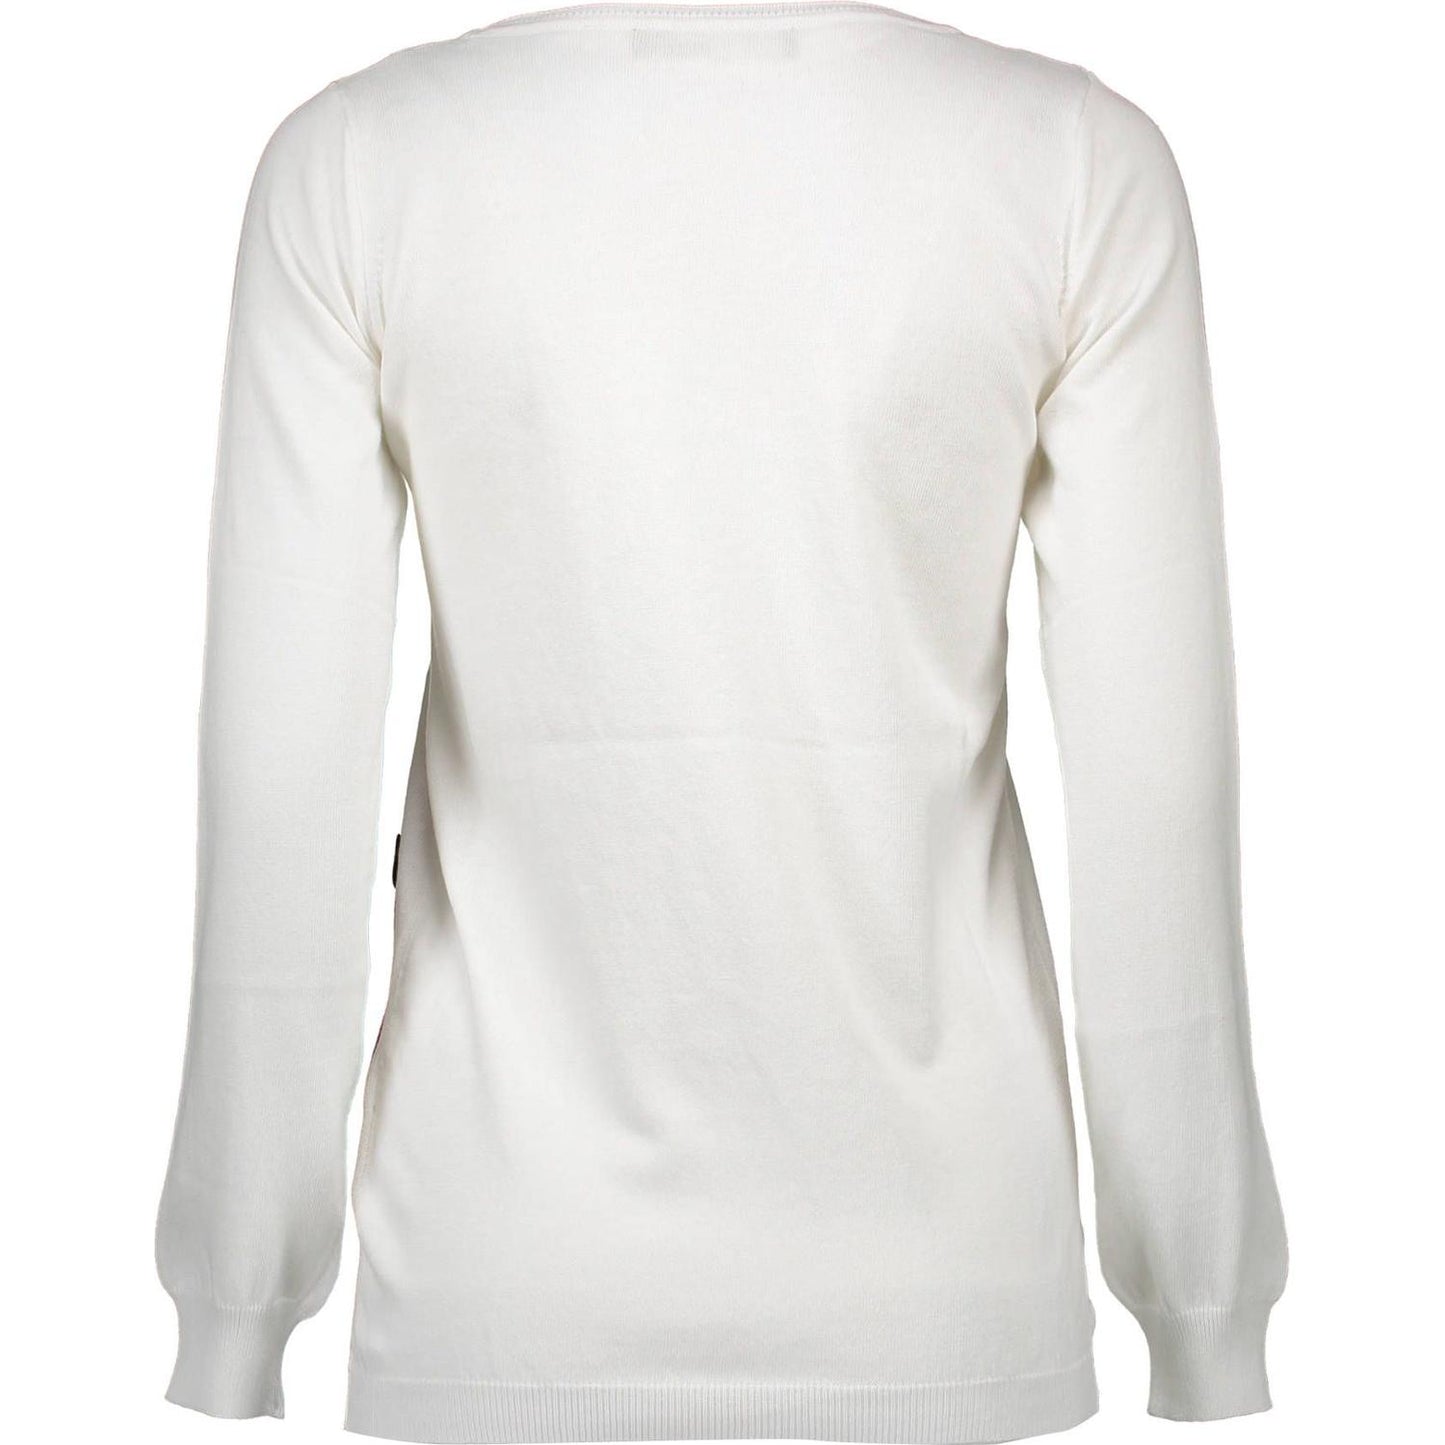 Love Moschino Chic White Sweater with Unique Embellishments chic-white-sweater-with-unique-embellishments